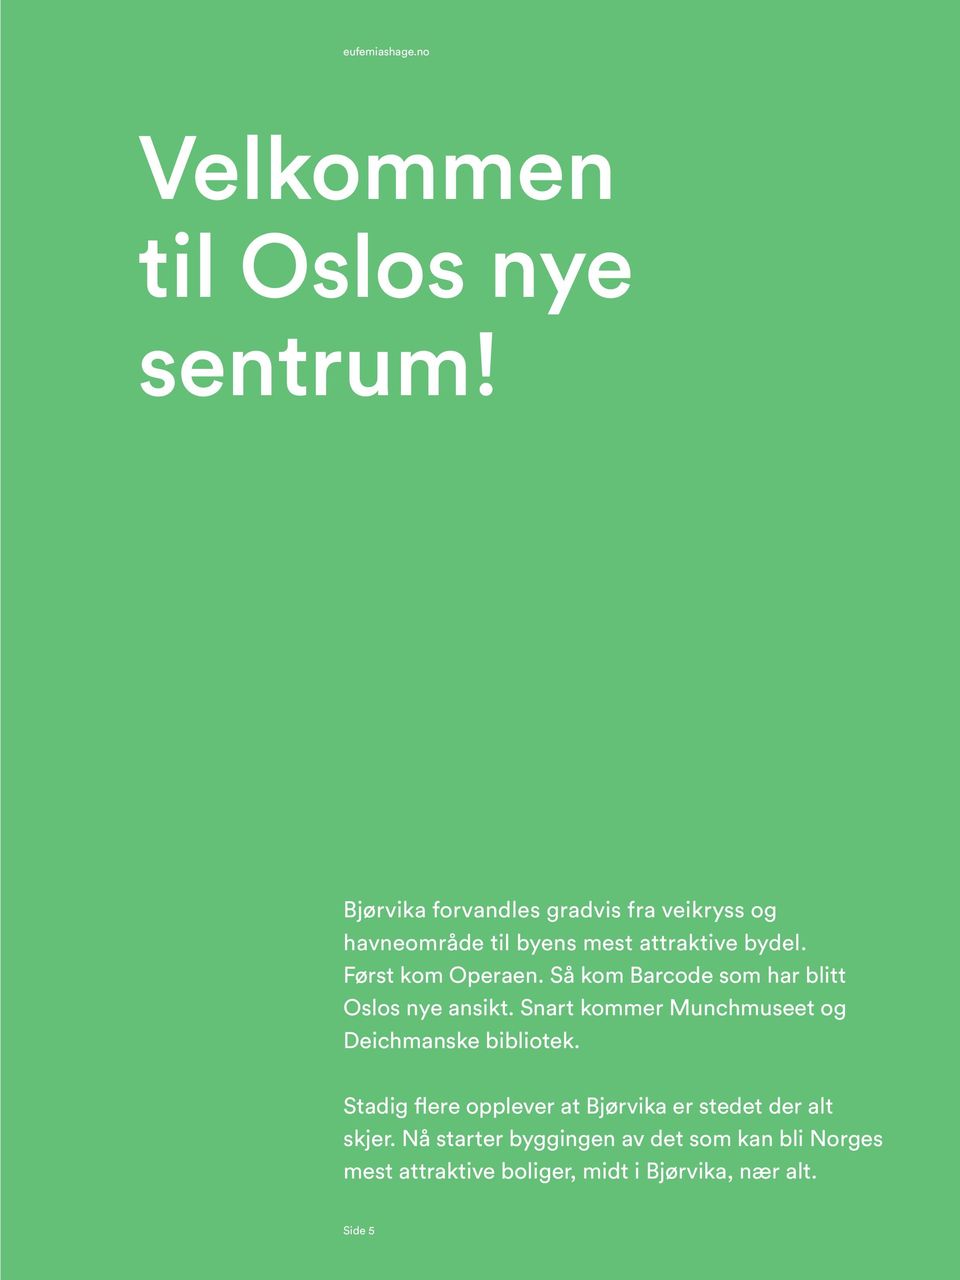 Først kom Operaen. Så kom Barcode som har blitt Oslos nye ansikt.